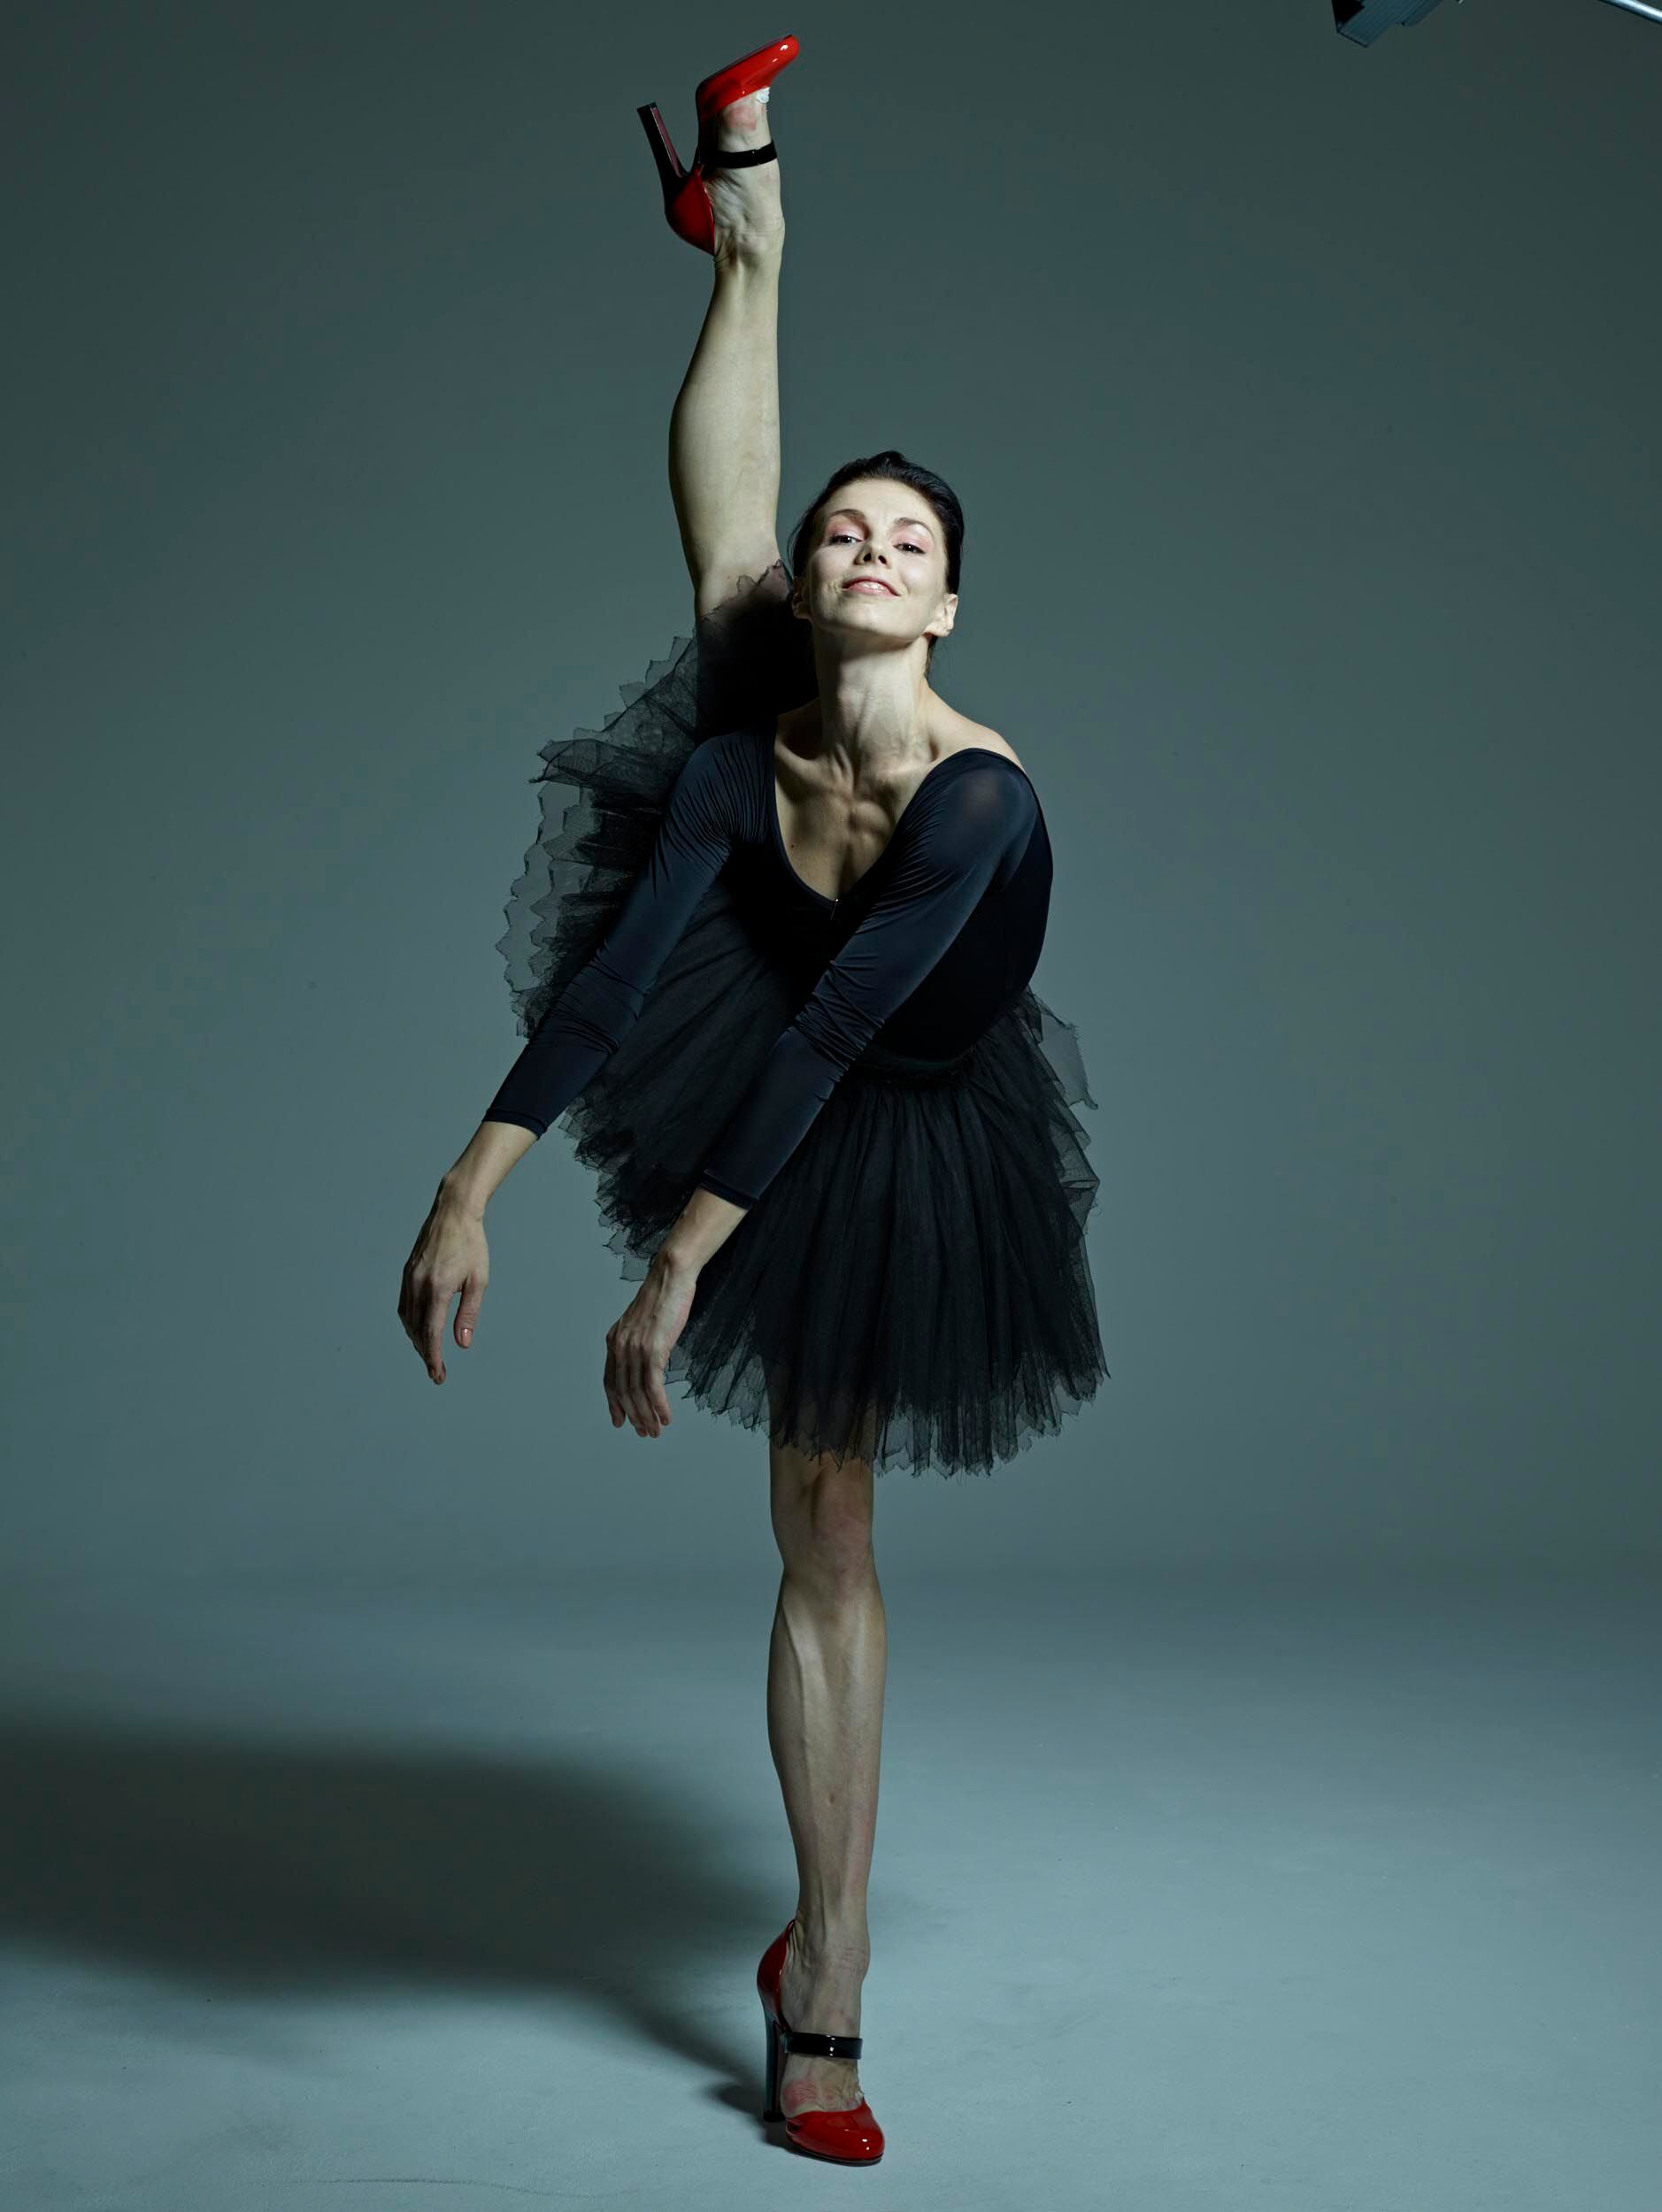 La bailarina rusa Natalia Osipova en una foto promocional de su gala.